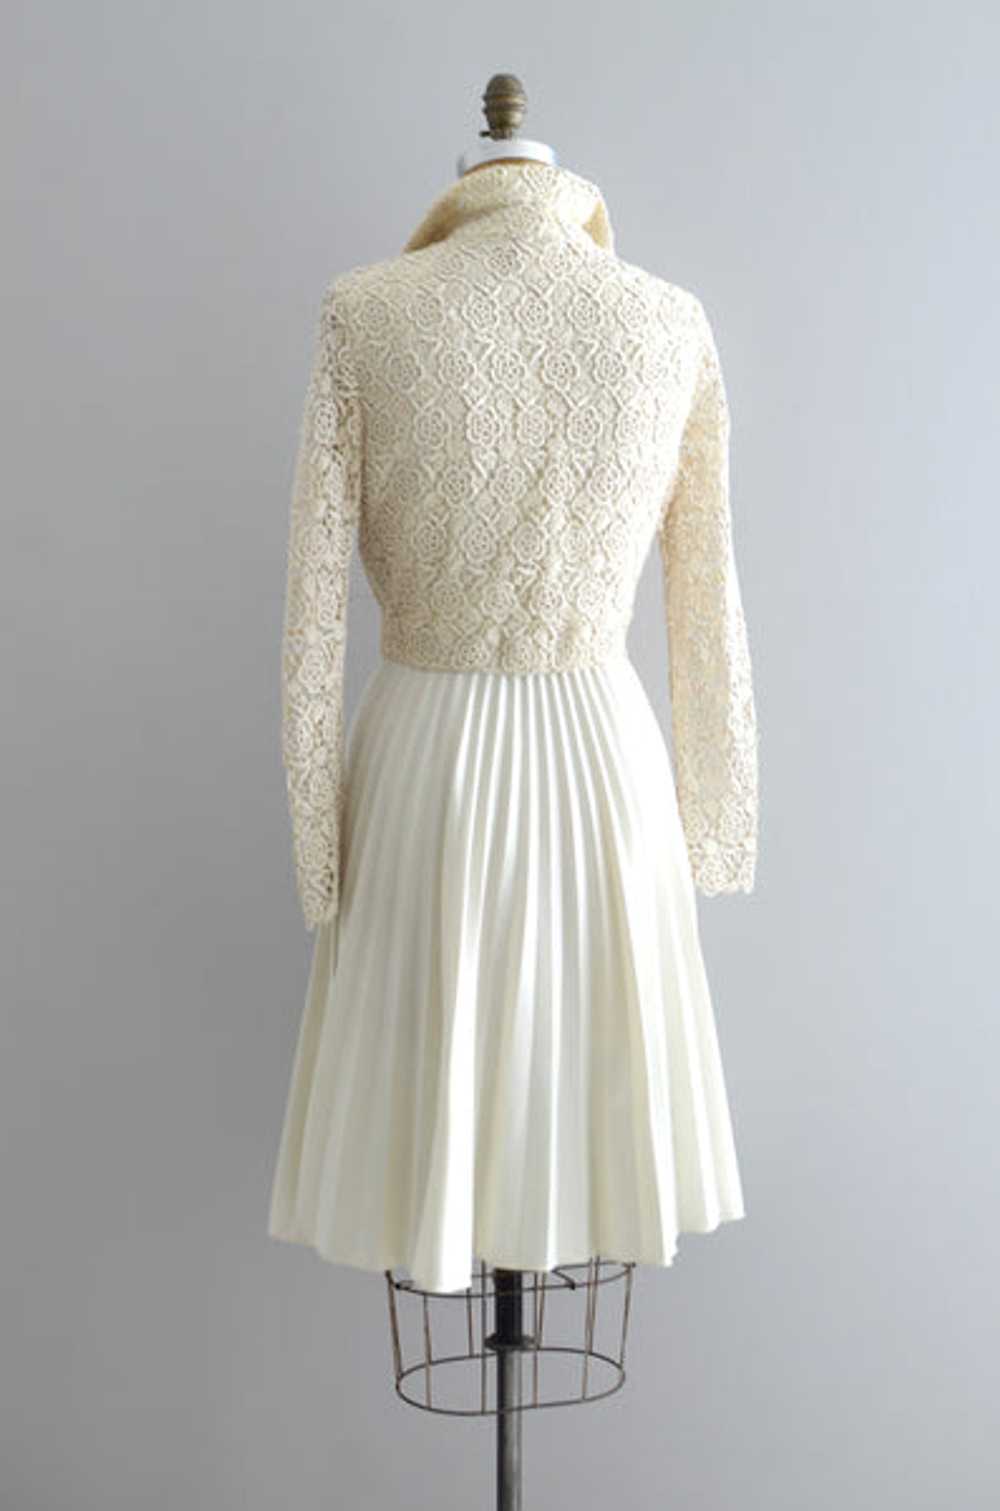 1970s Lace Dress - image 4